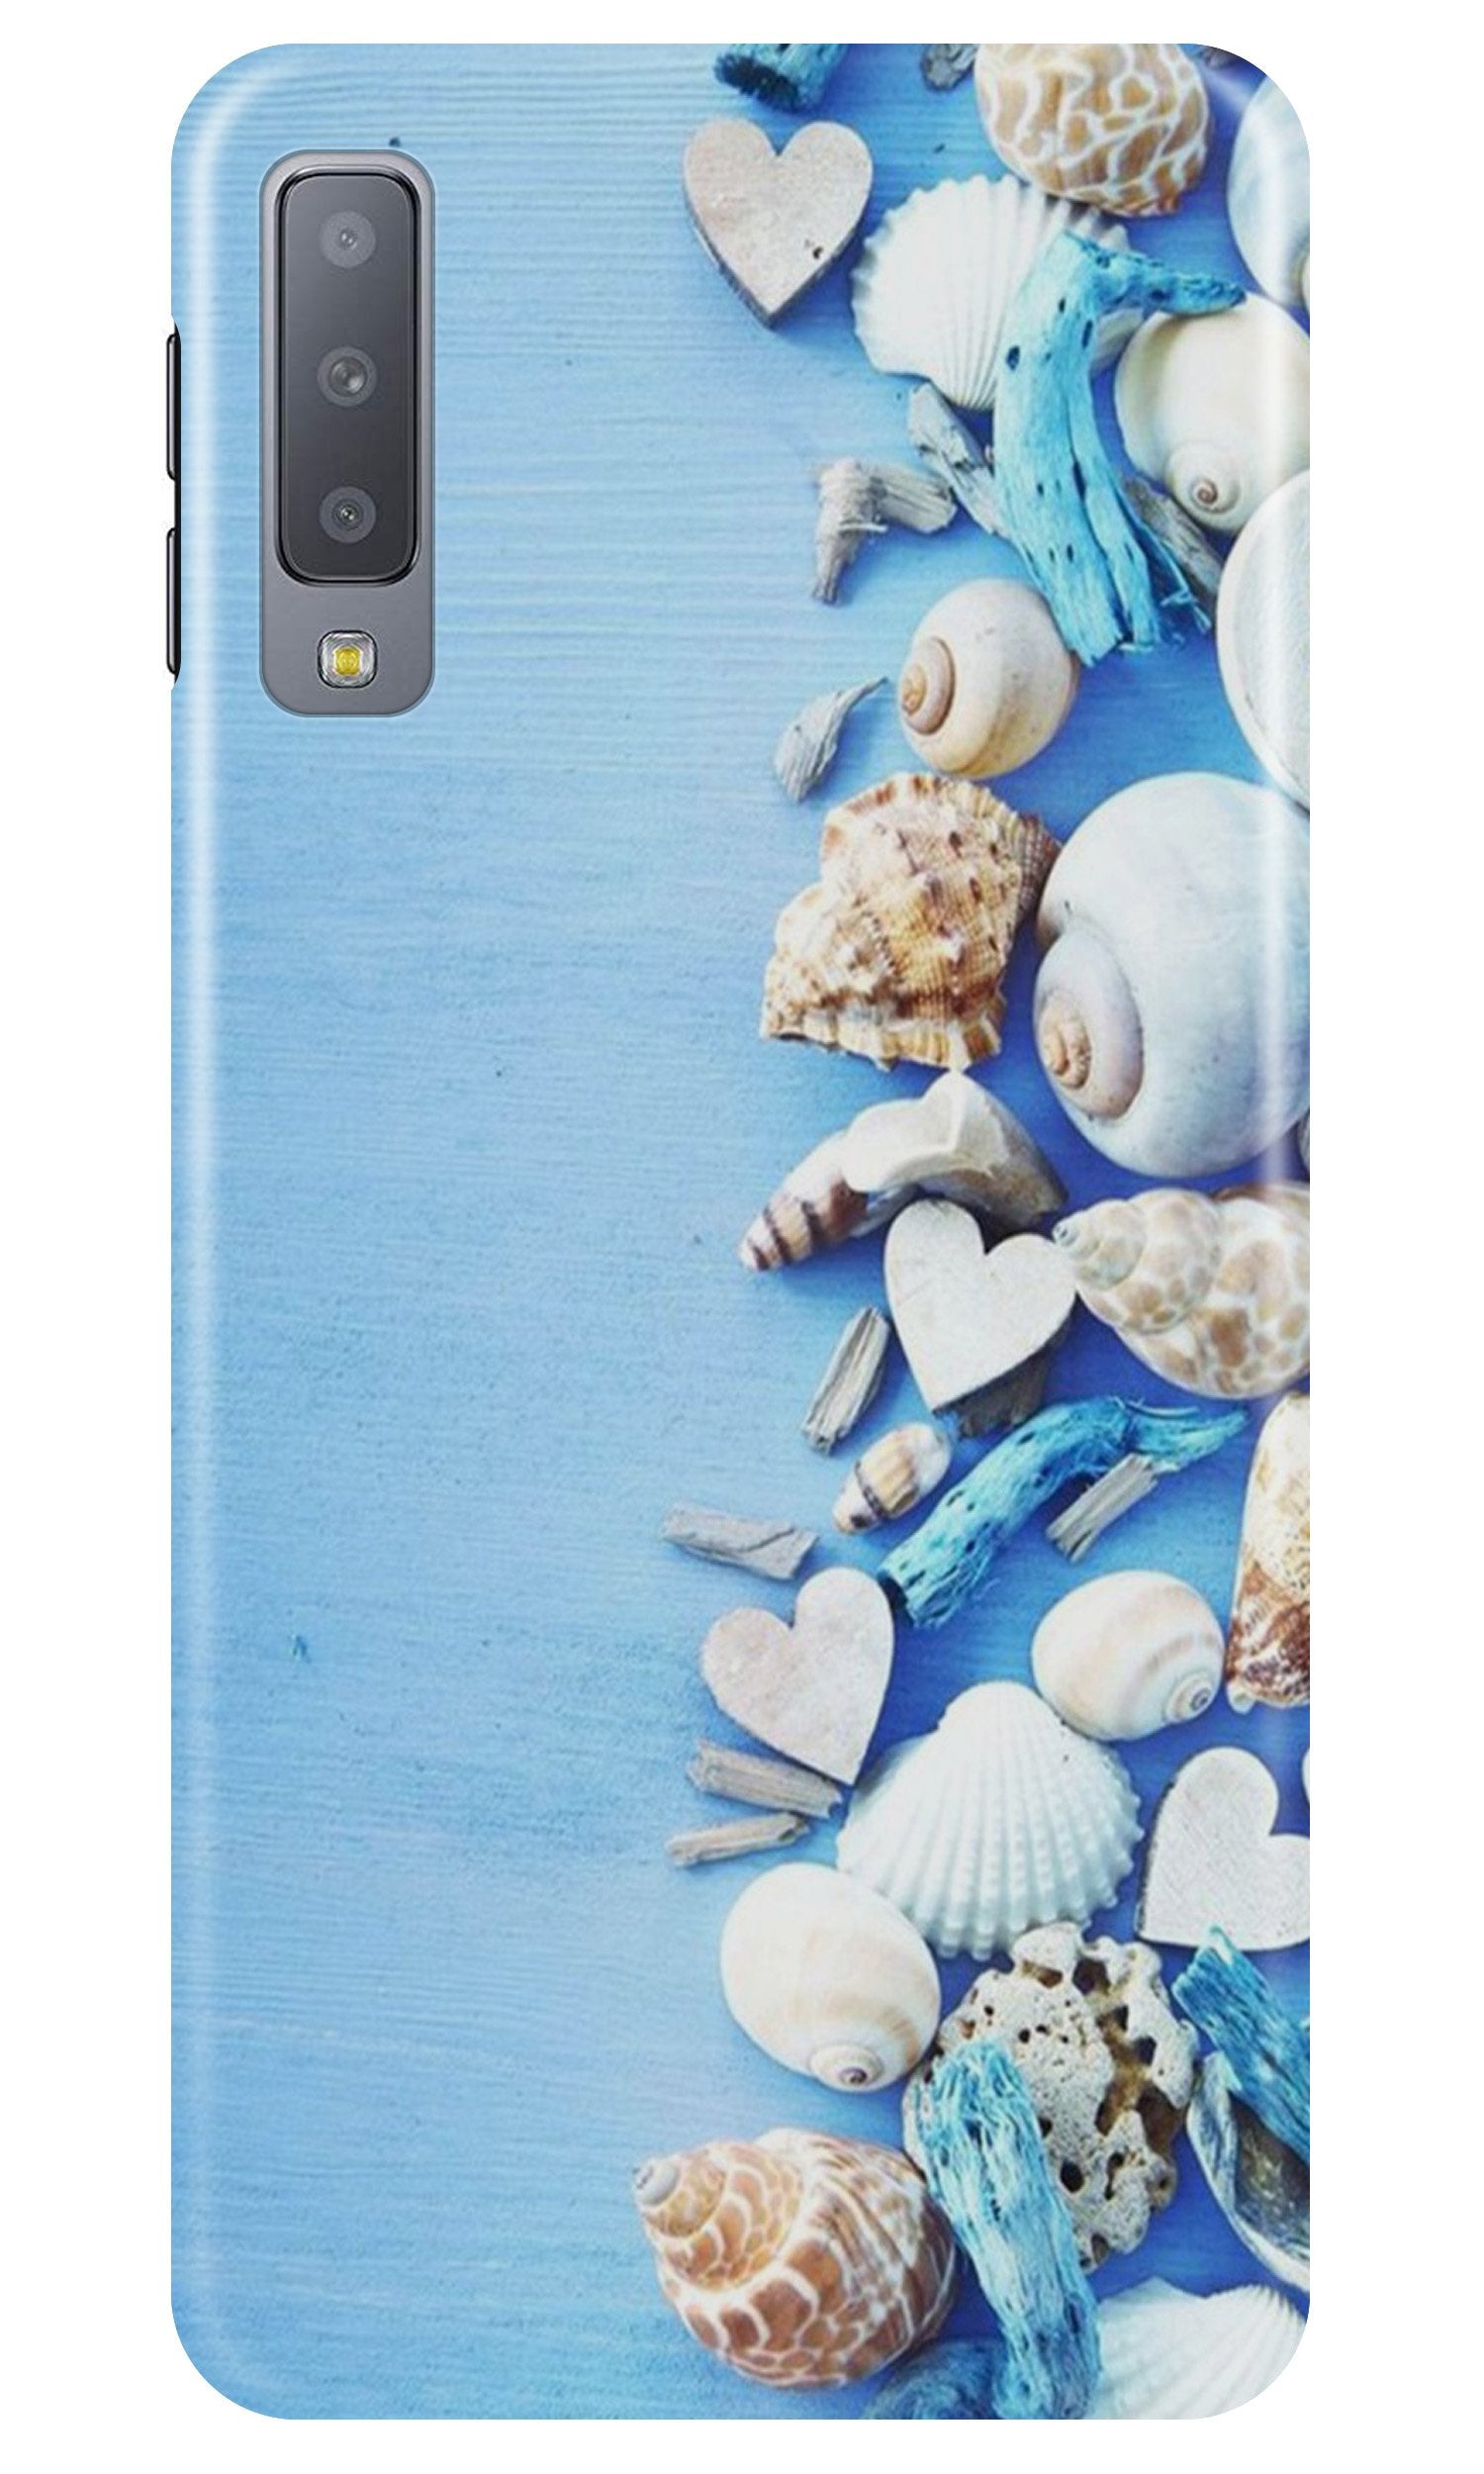 Sea Shells2 Case for Samsung Galaxy A50s